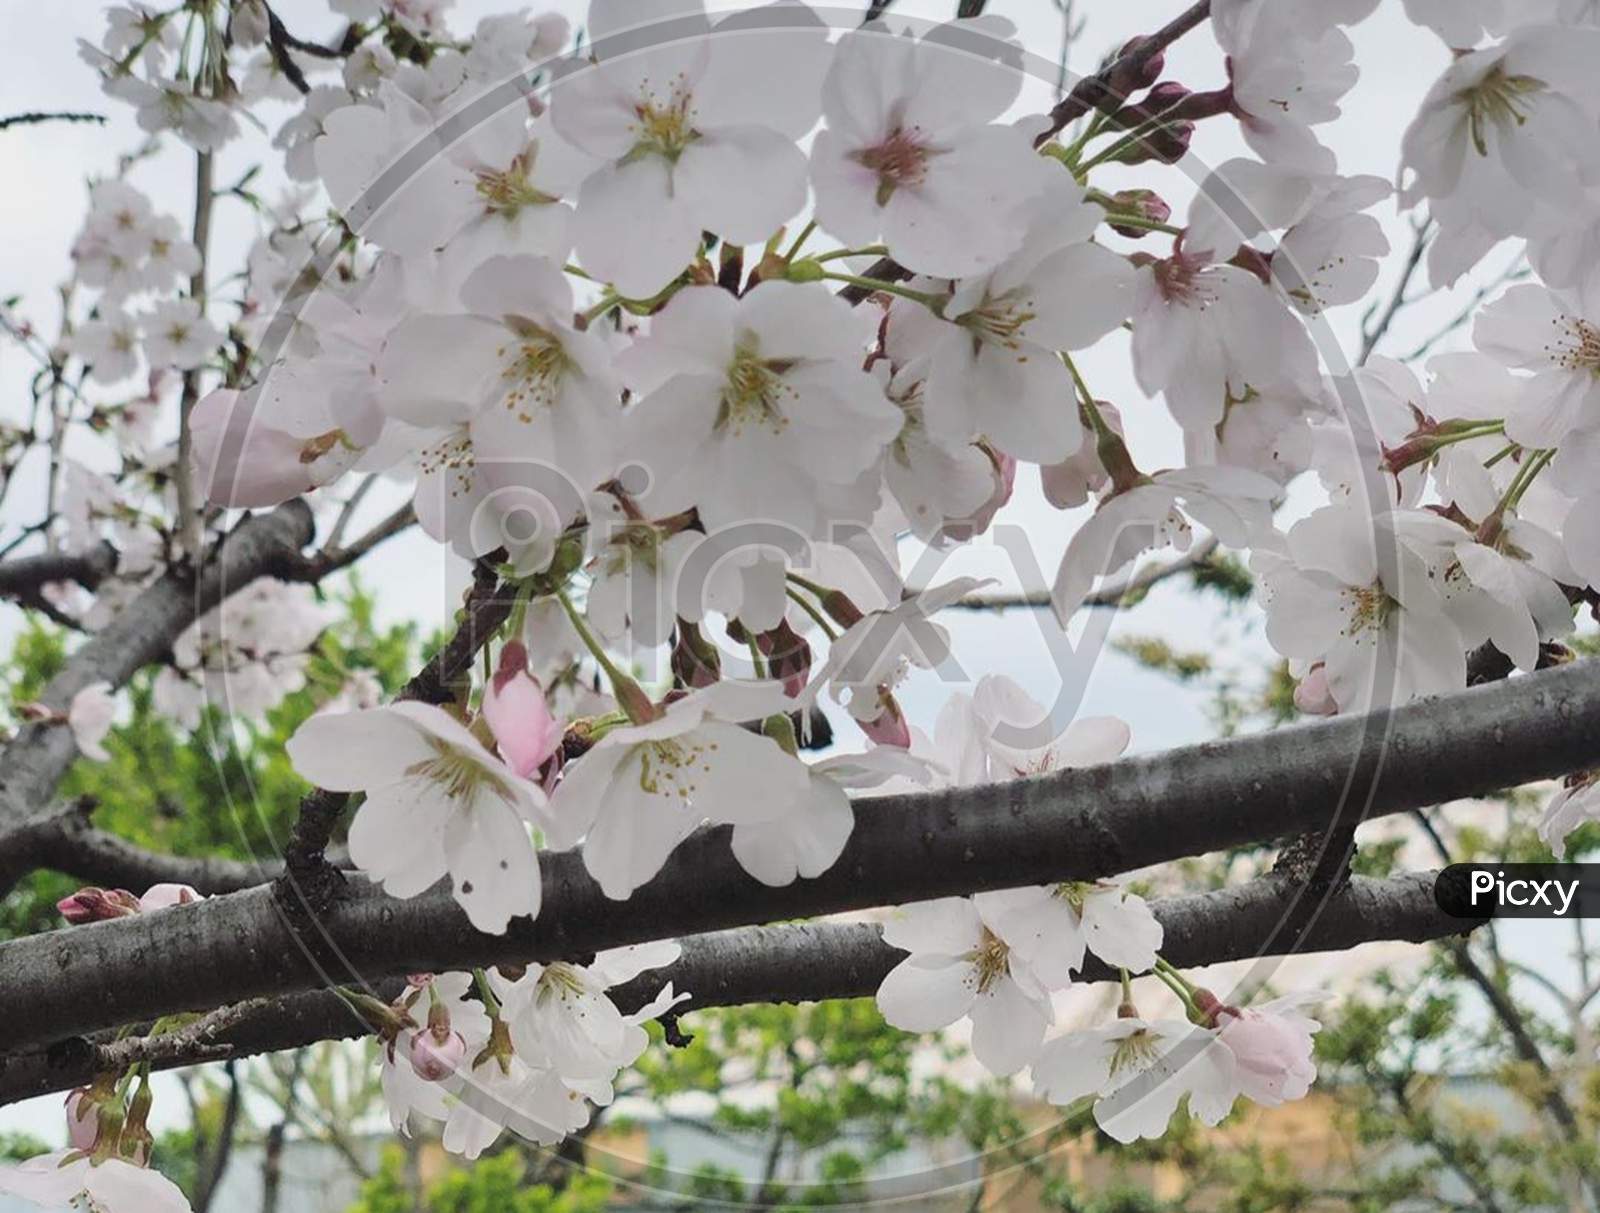 Cherry blossom×Remove  Blossom×Remove  Flowering plant×Remove  Tree×Remove  Branch×Remove  Plant×Remove  Flower×Remove  Petal×Remove  Spring×Remove  Twig×